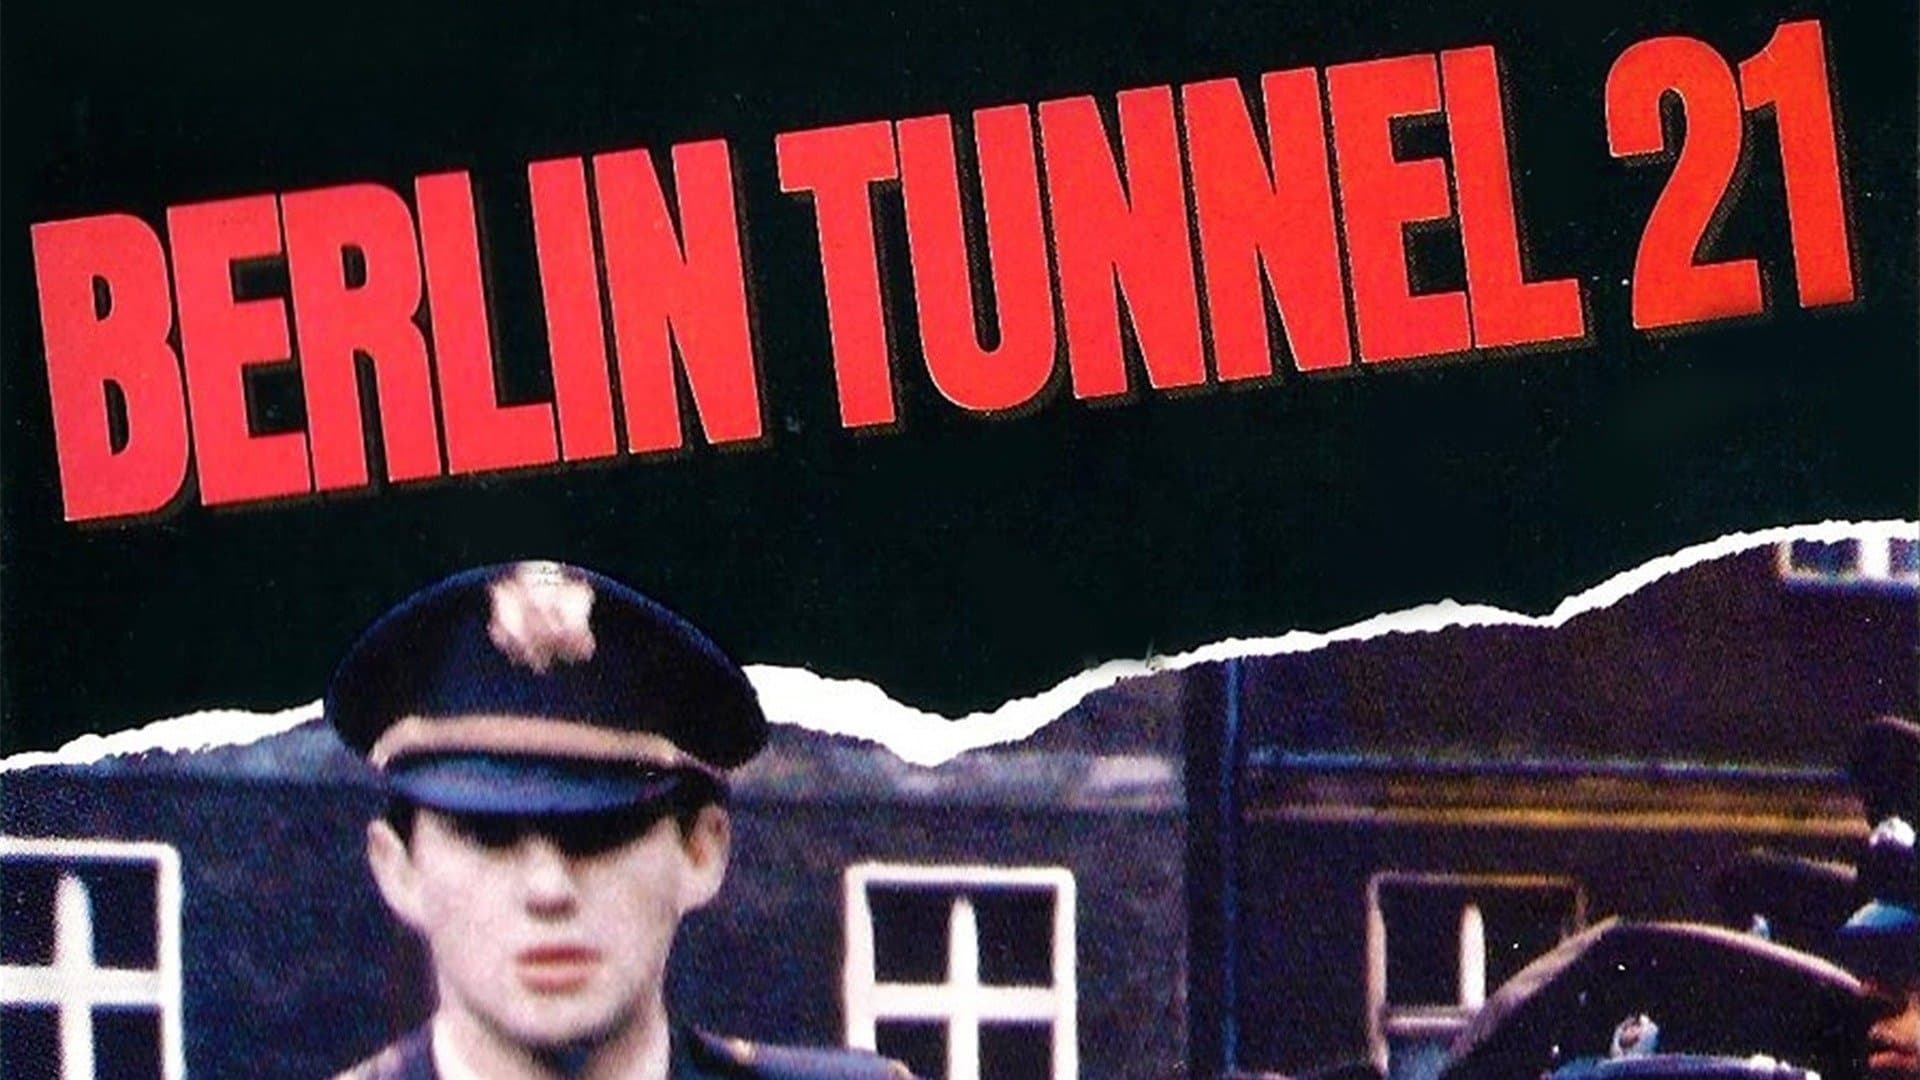 Berlin Tunnel 21 (1981)